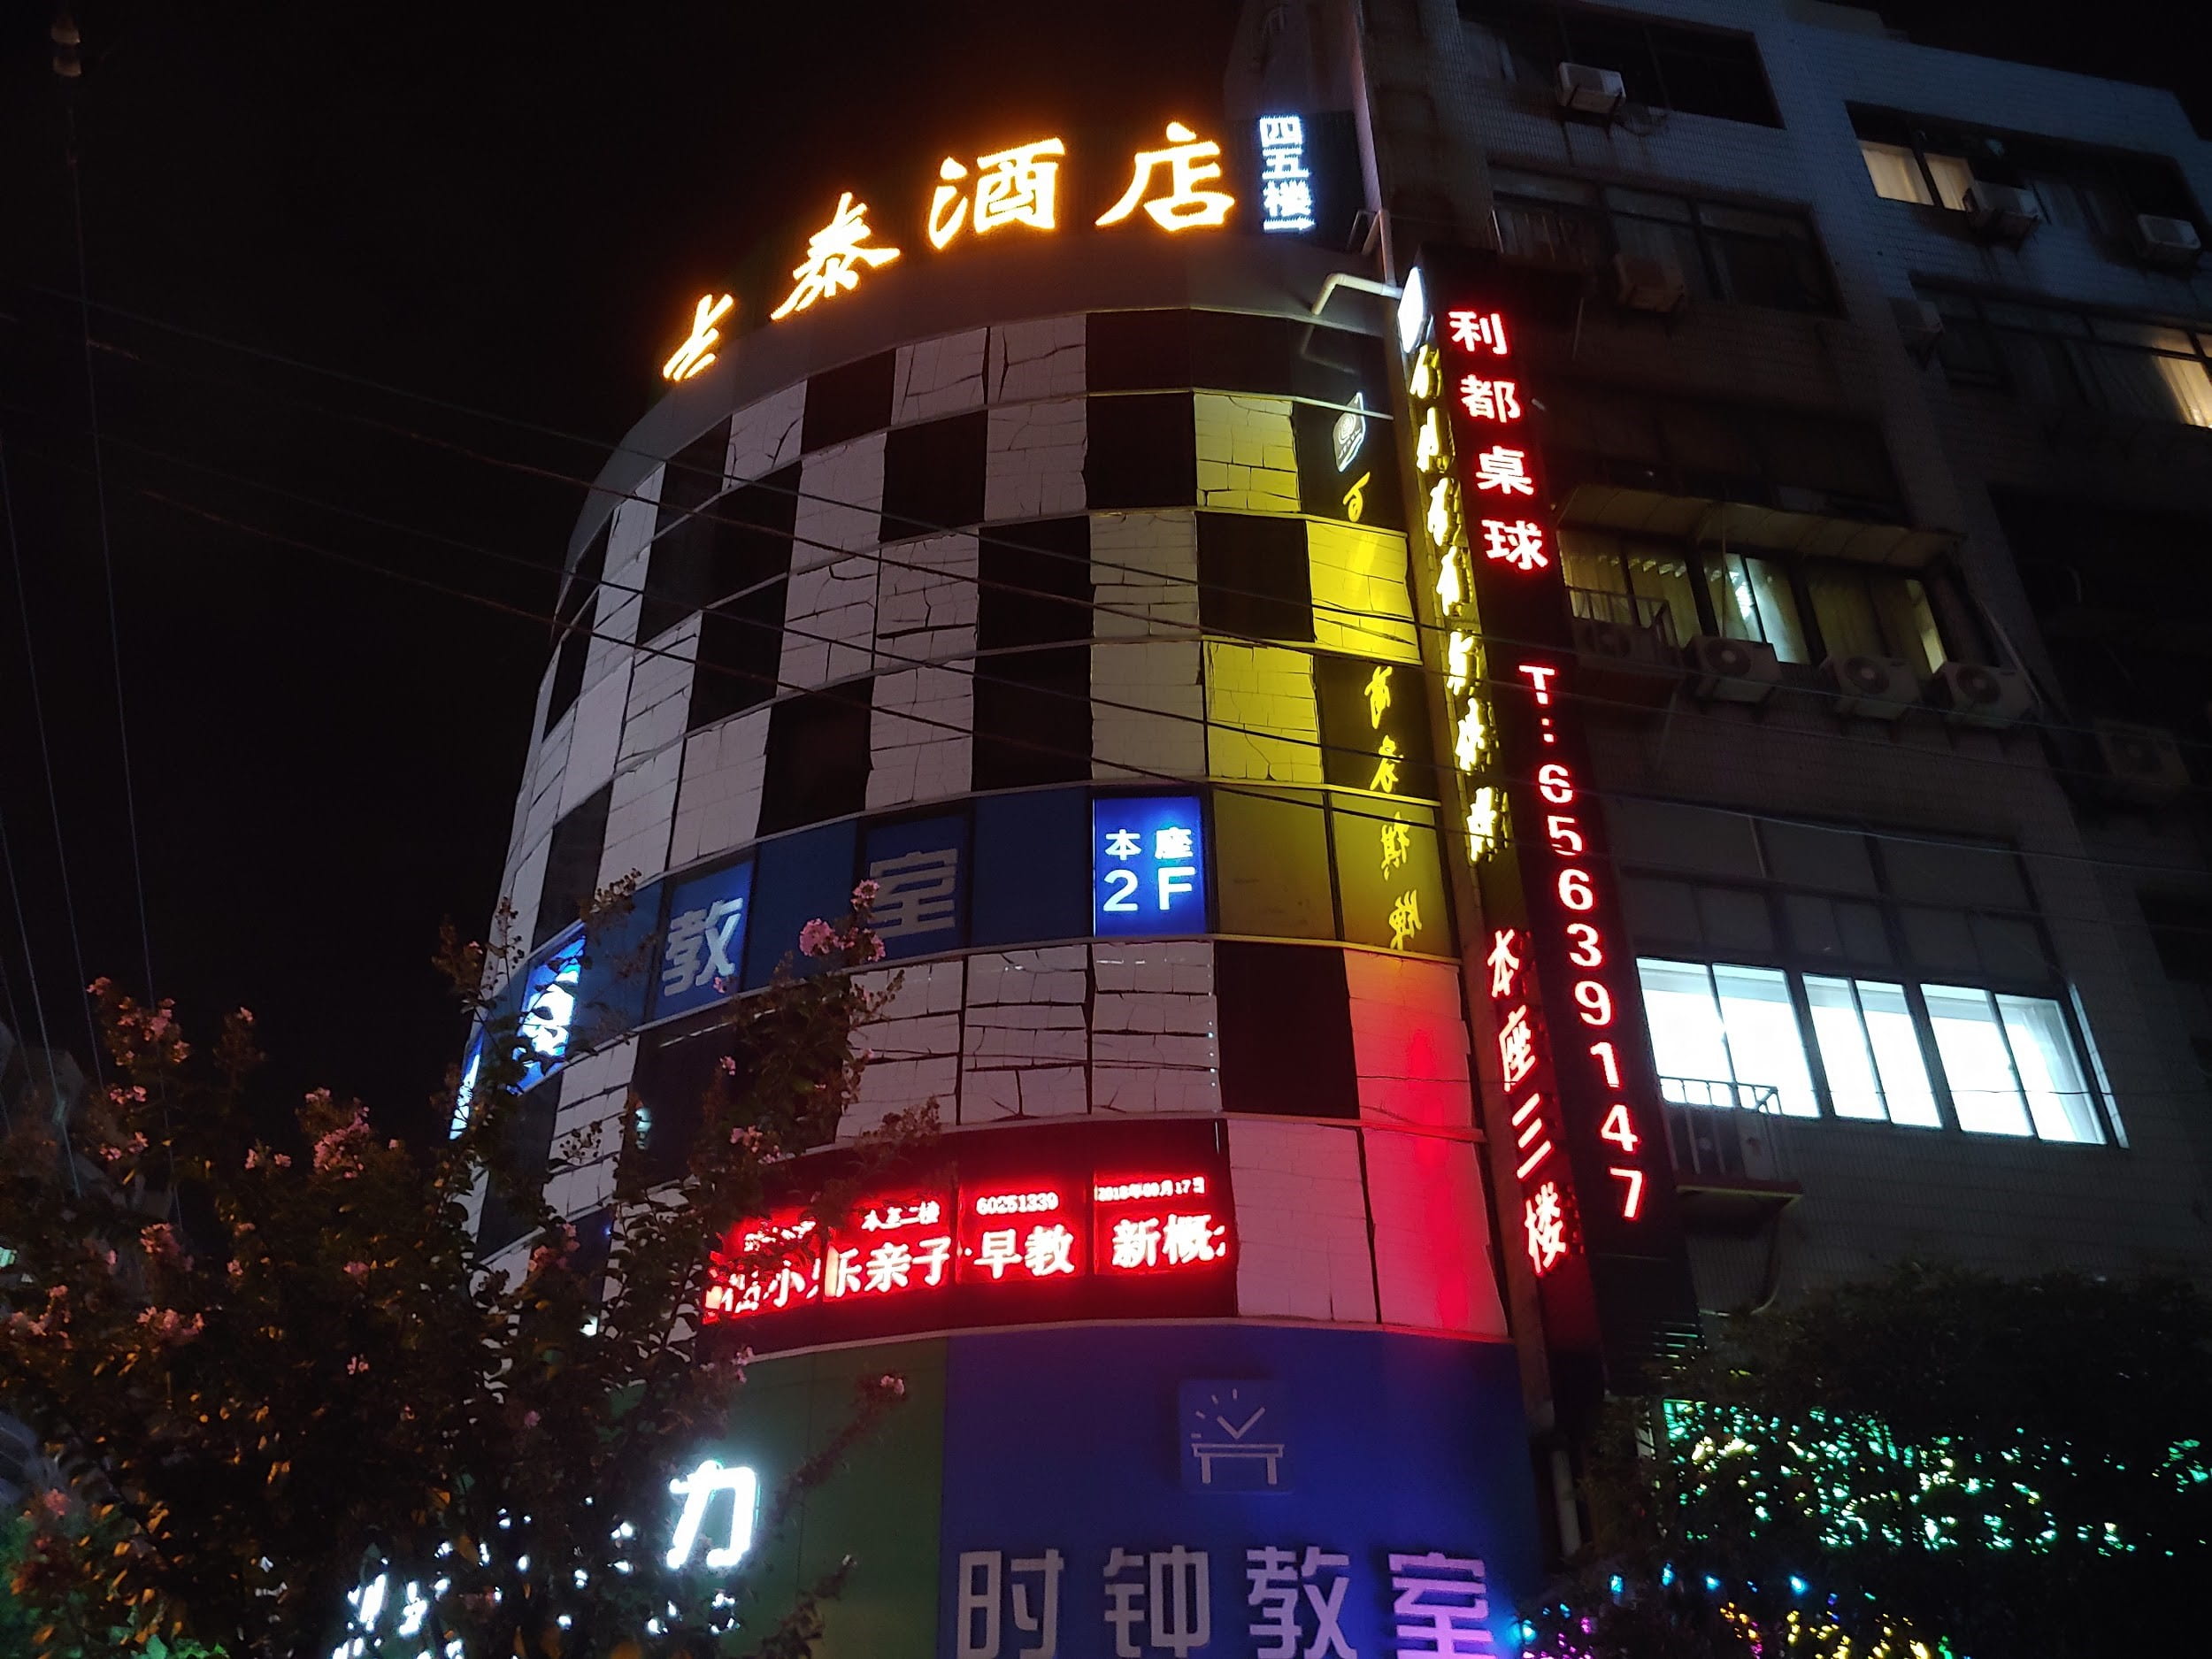 Neon building in Shanghai